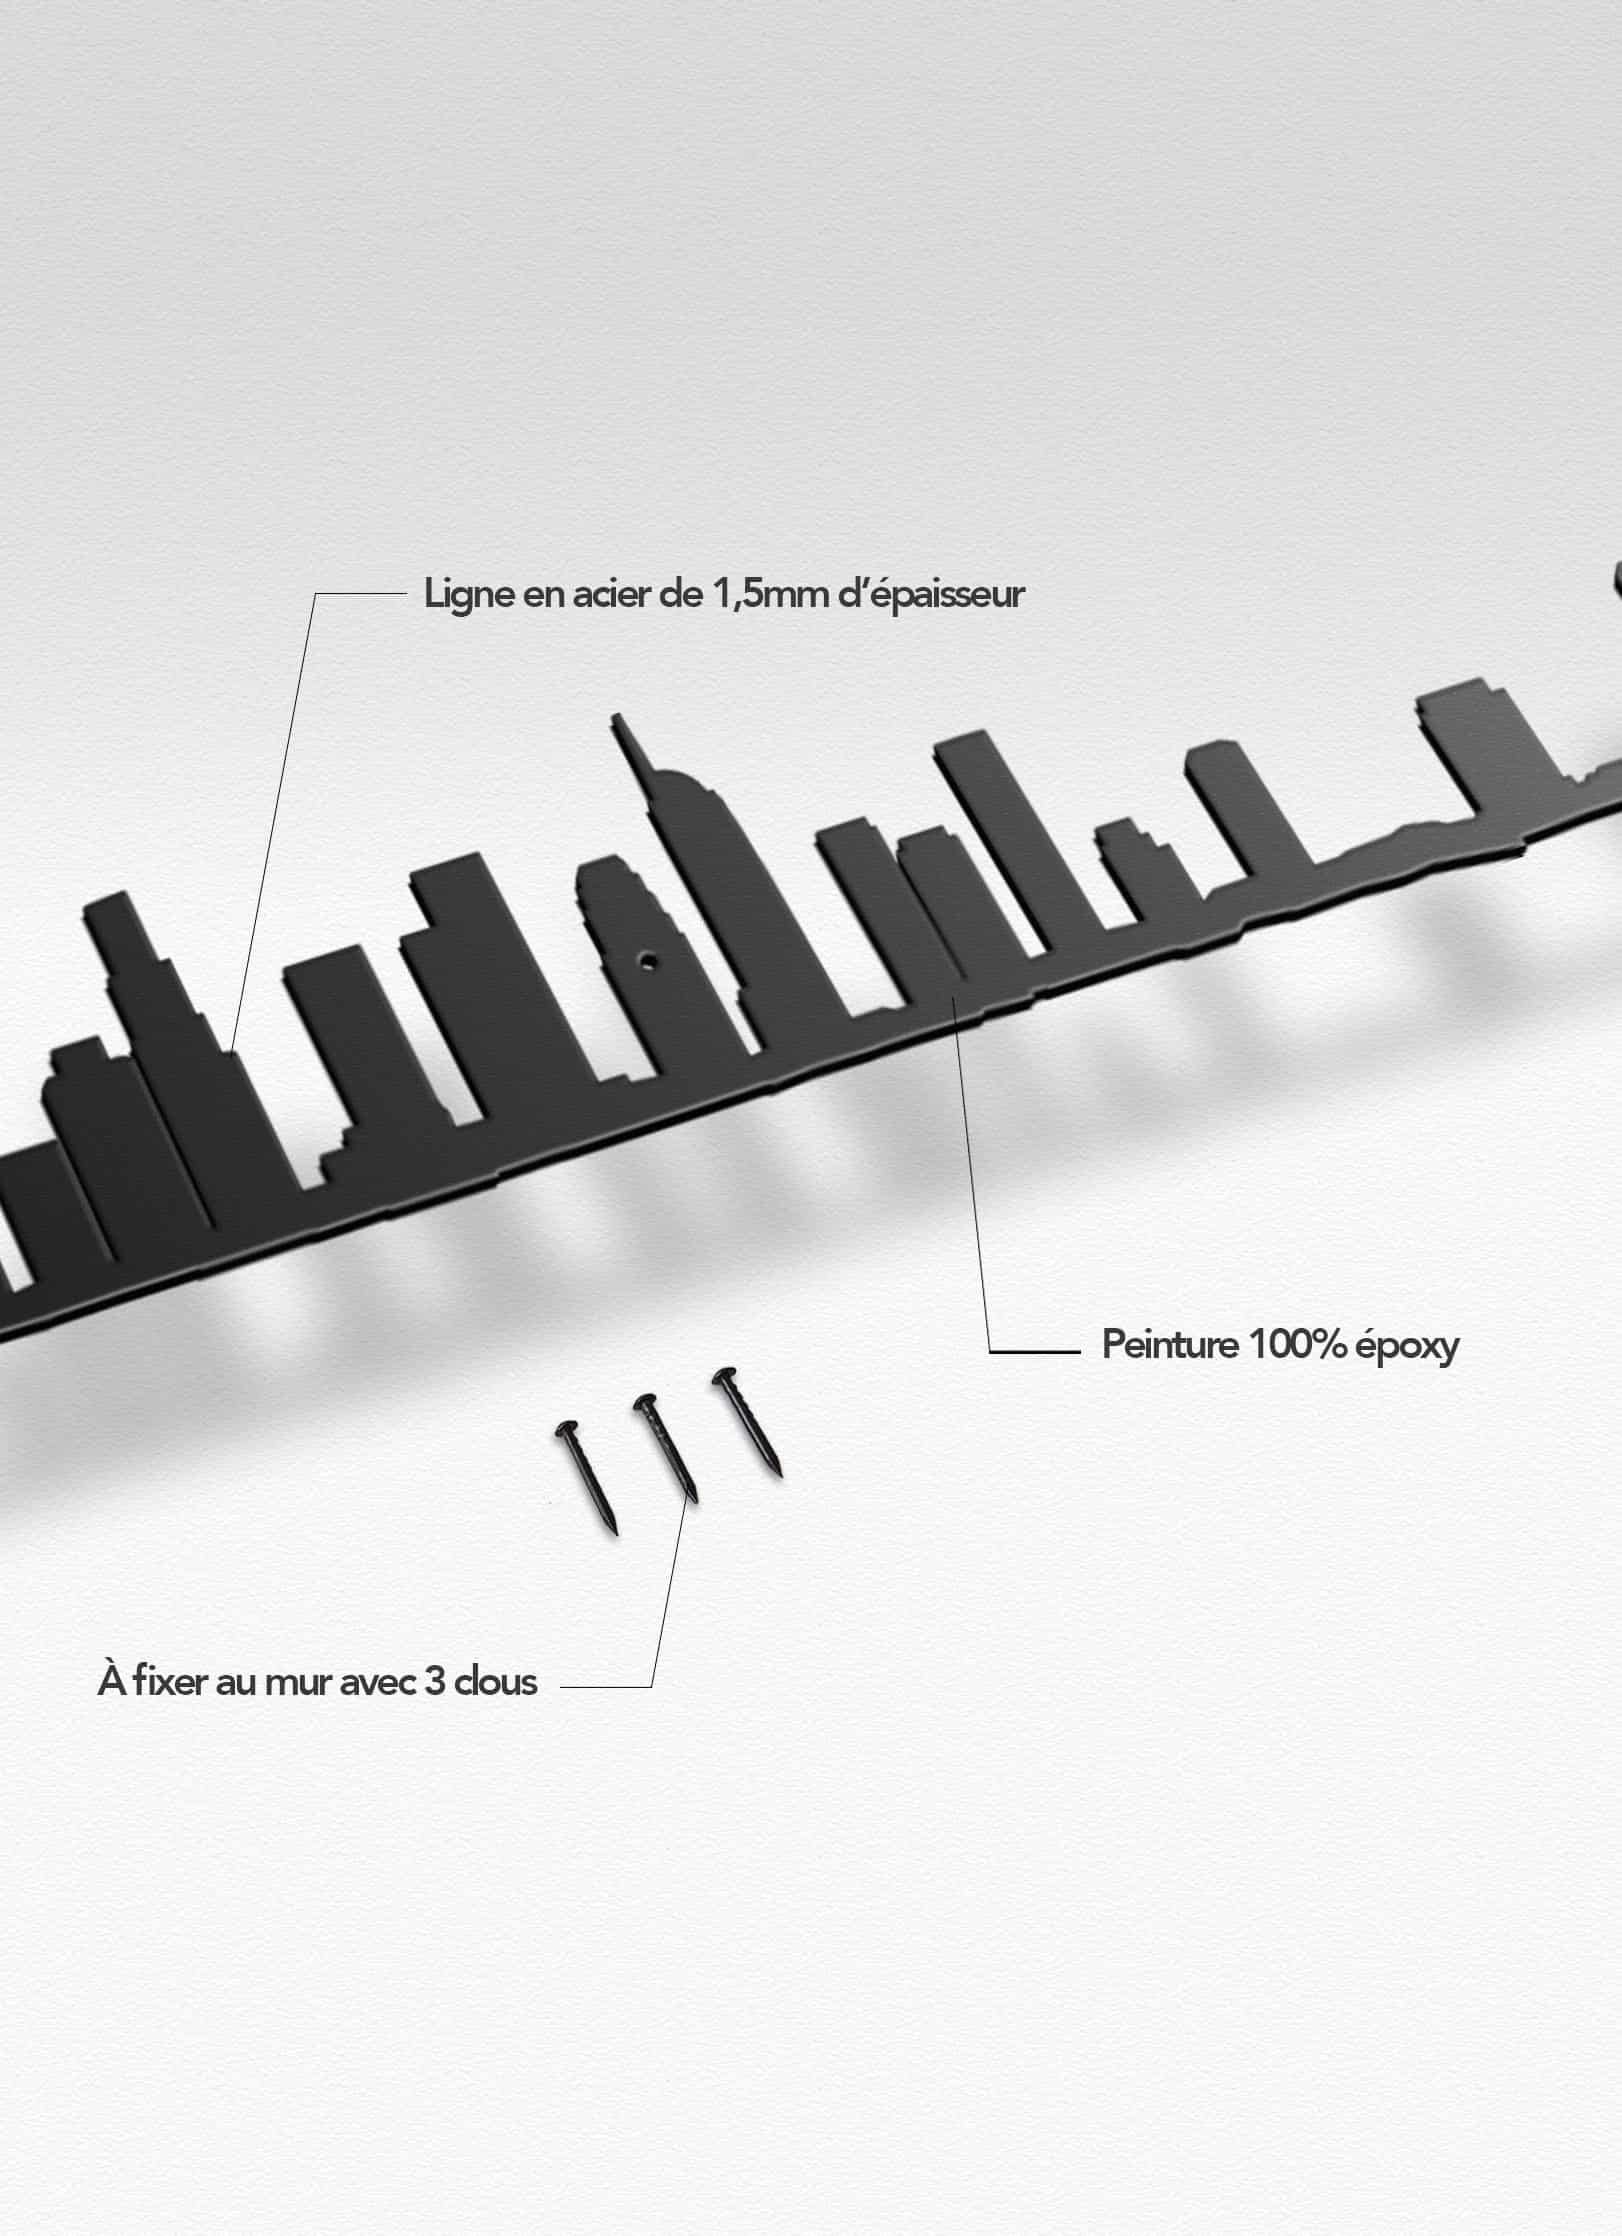 Presentation of the skyline of Los Angeles